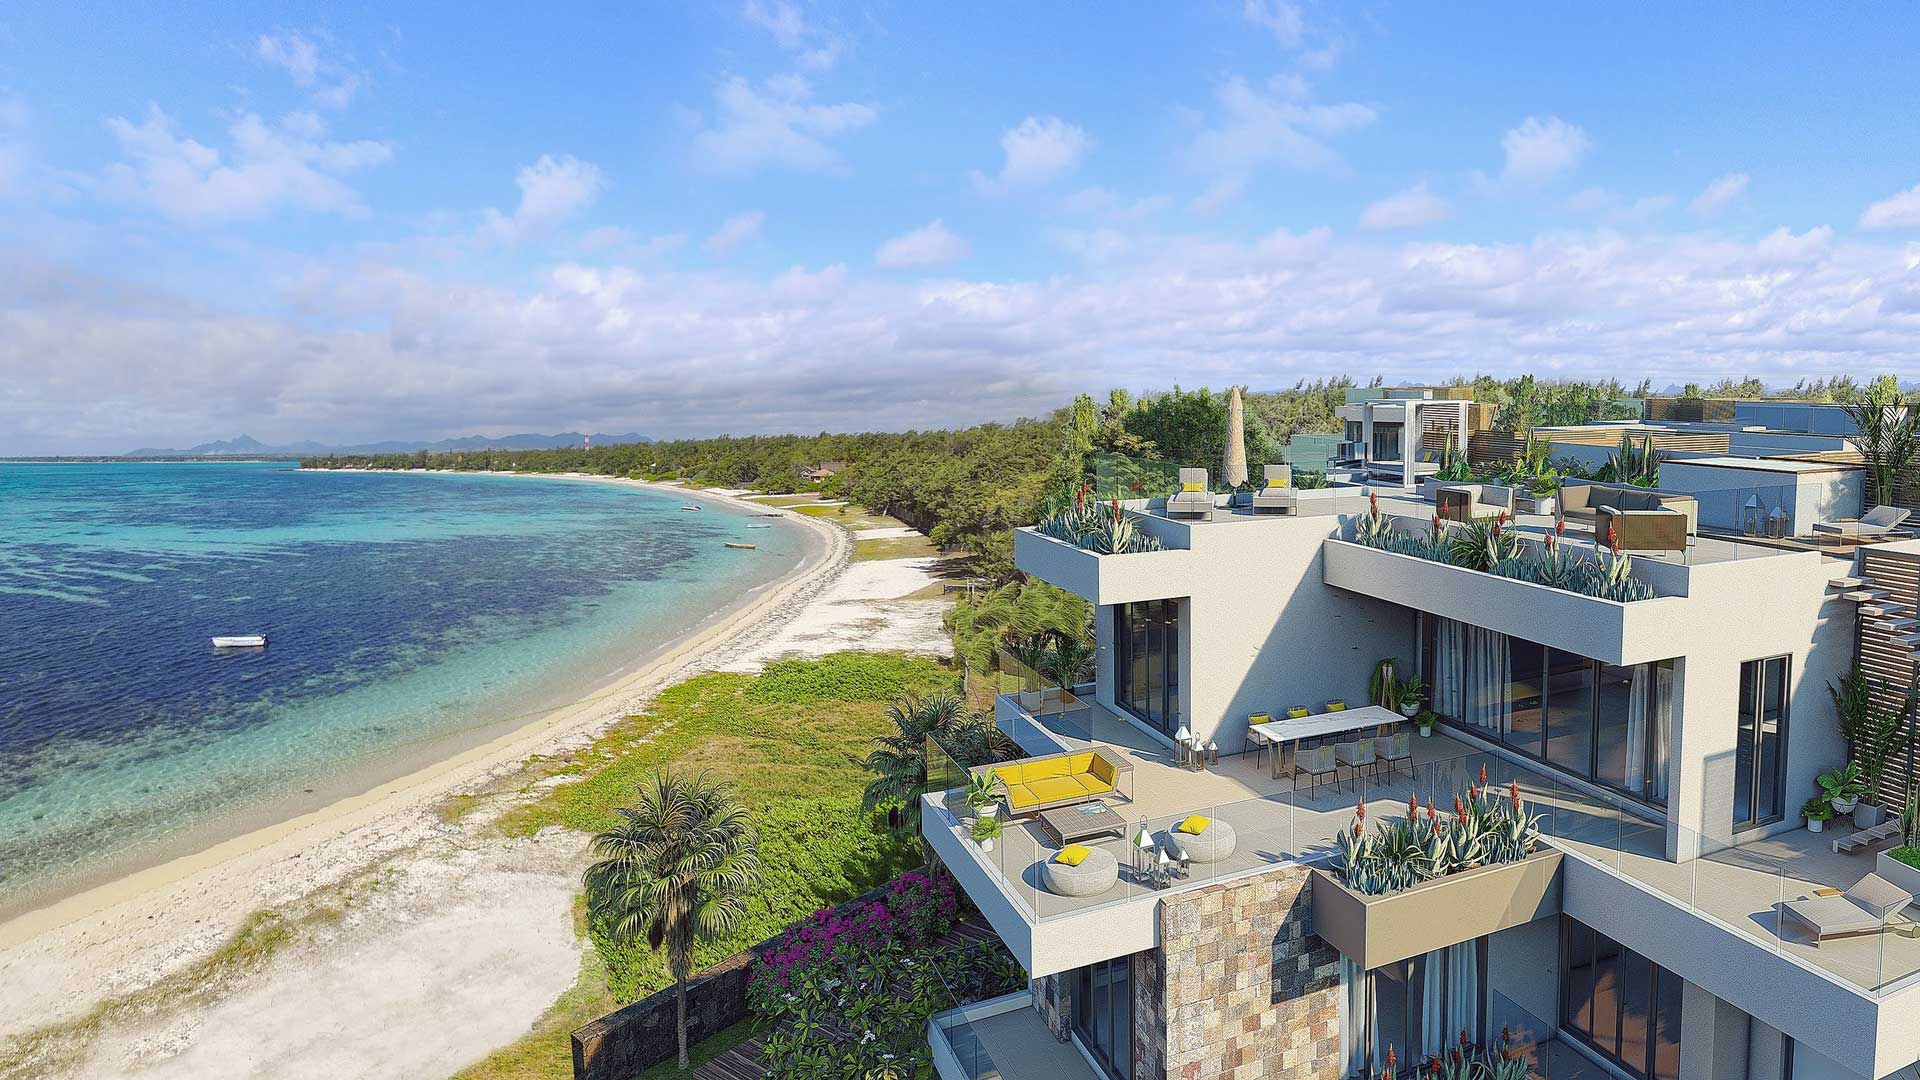 Appartement front de mer ile maurice
Ocean Terraces resience
Westimmo - agence immobilière ile maurice